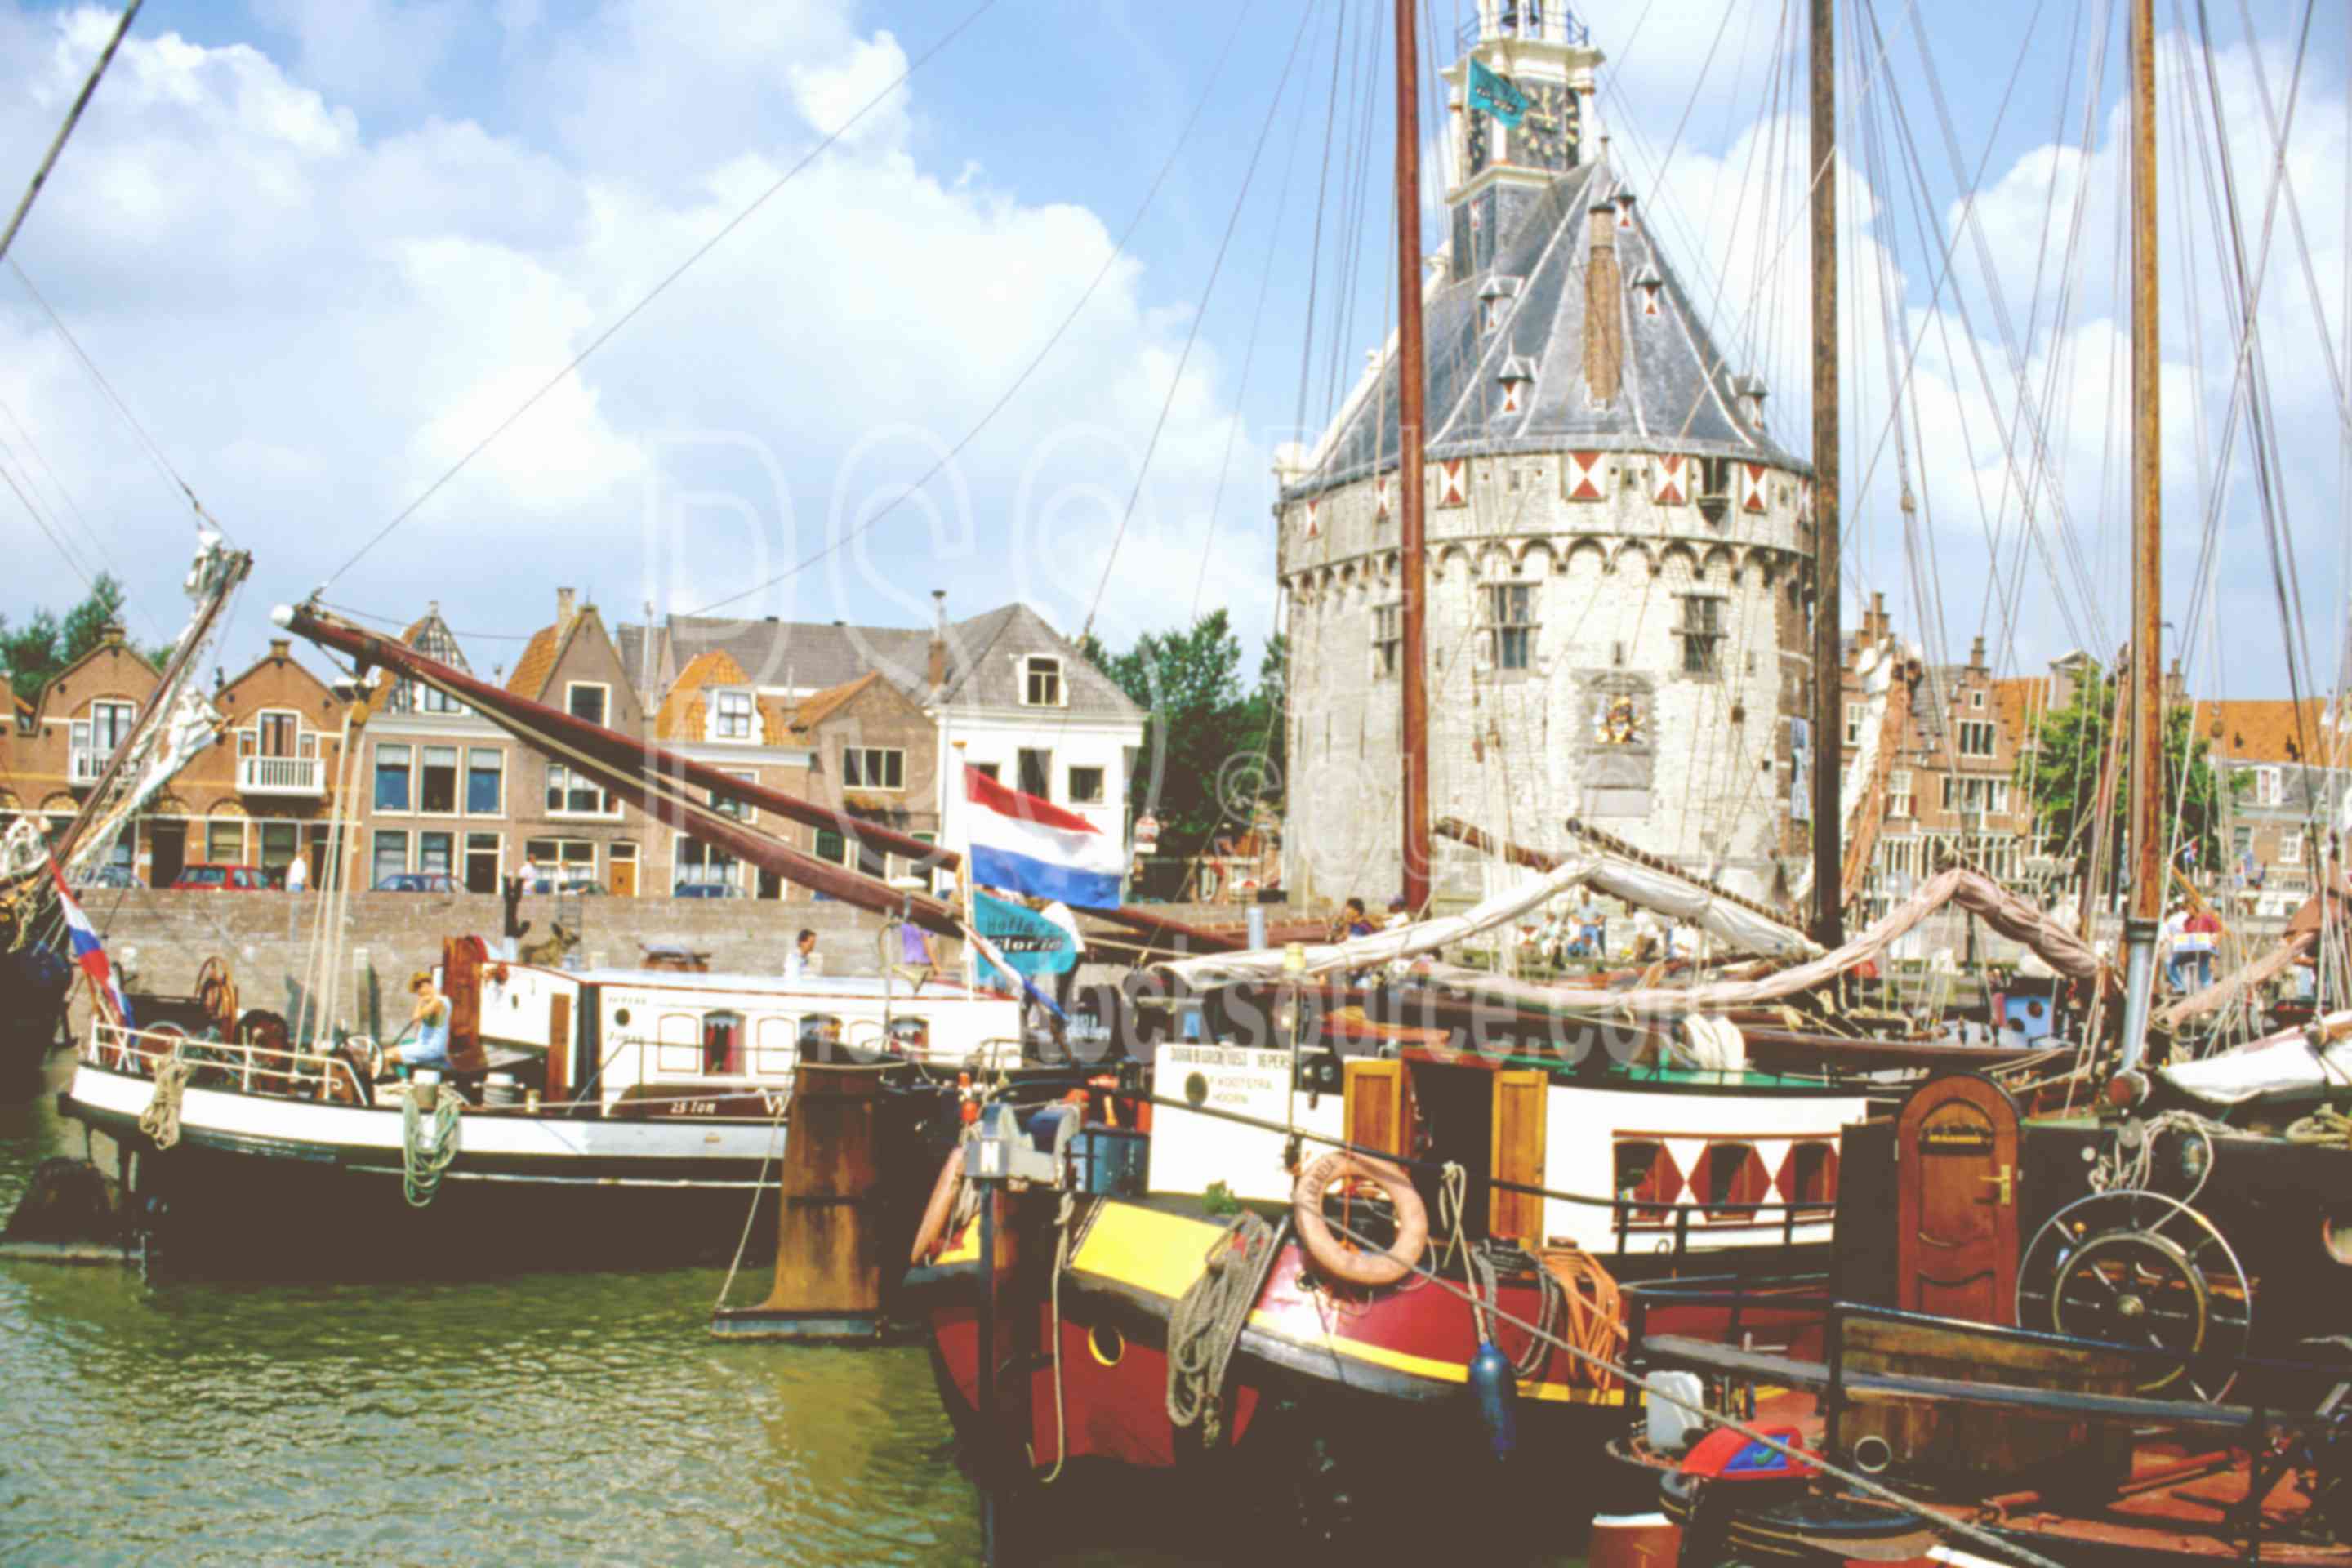 Hoofdtoren Tower,europe,harbor,holland,hoofdtoren,tower,wharf,boats